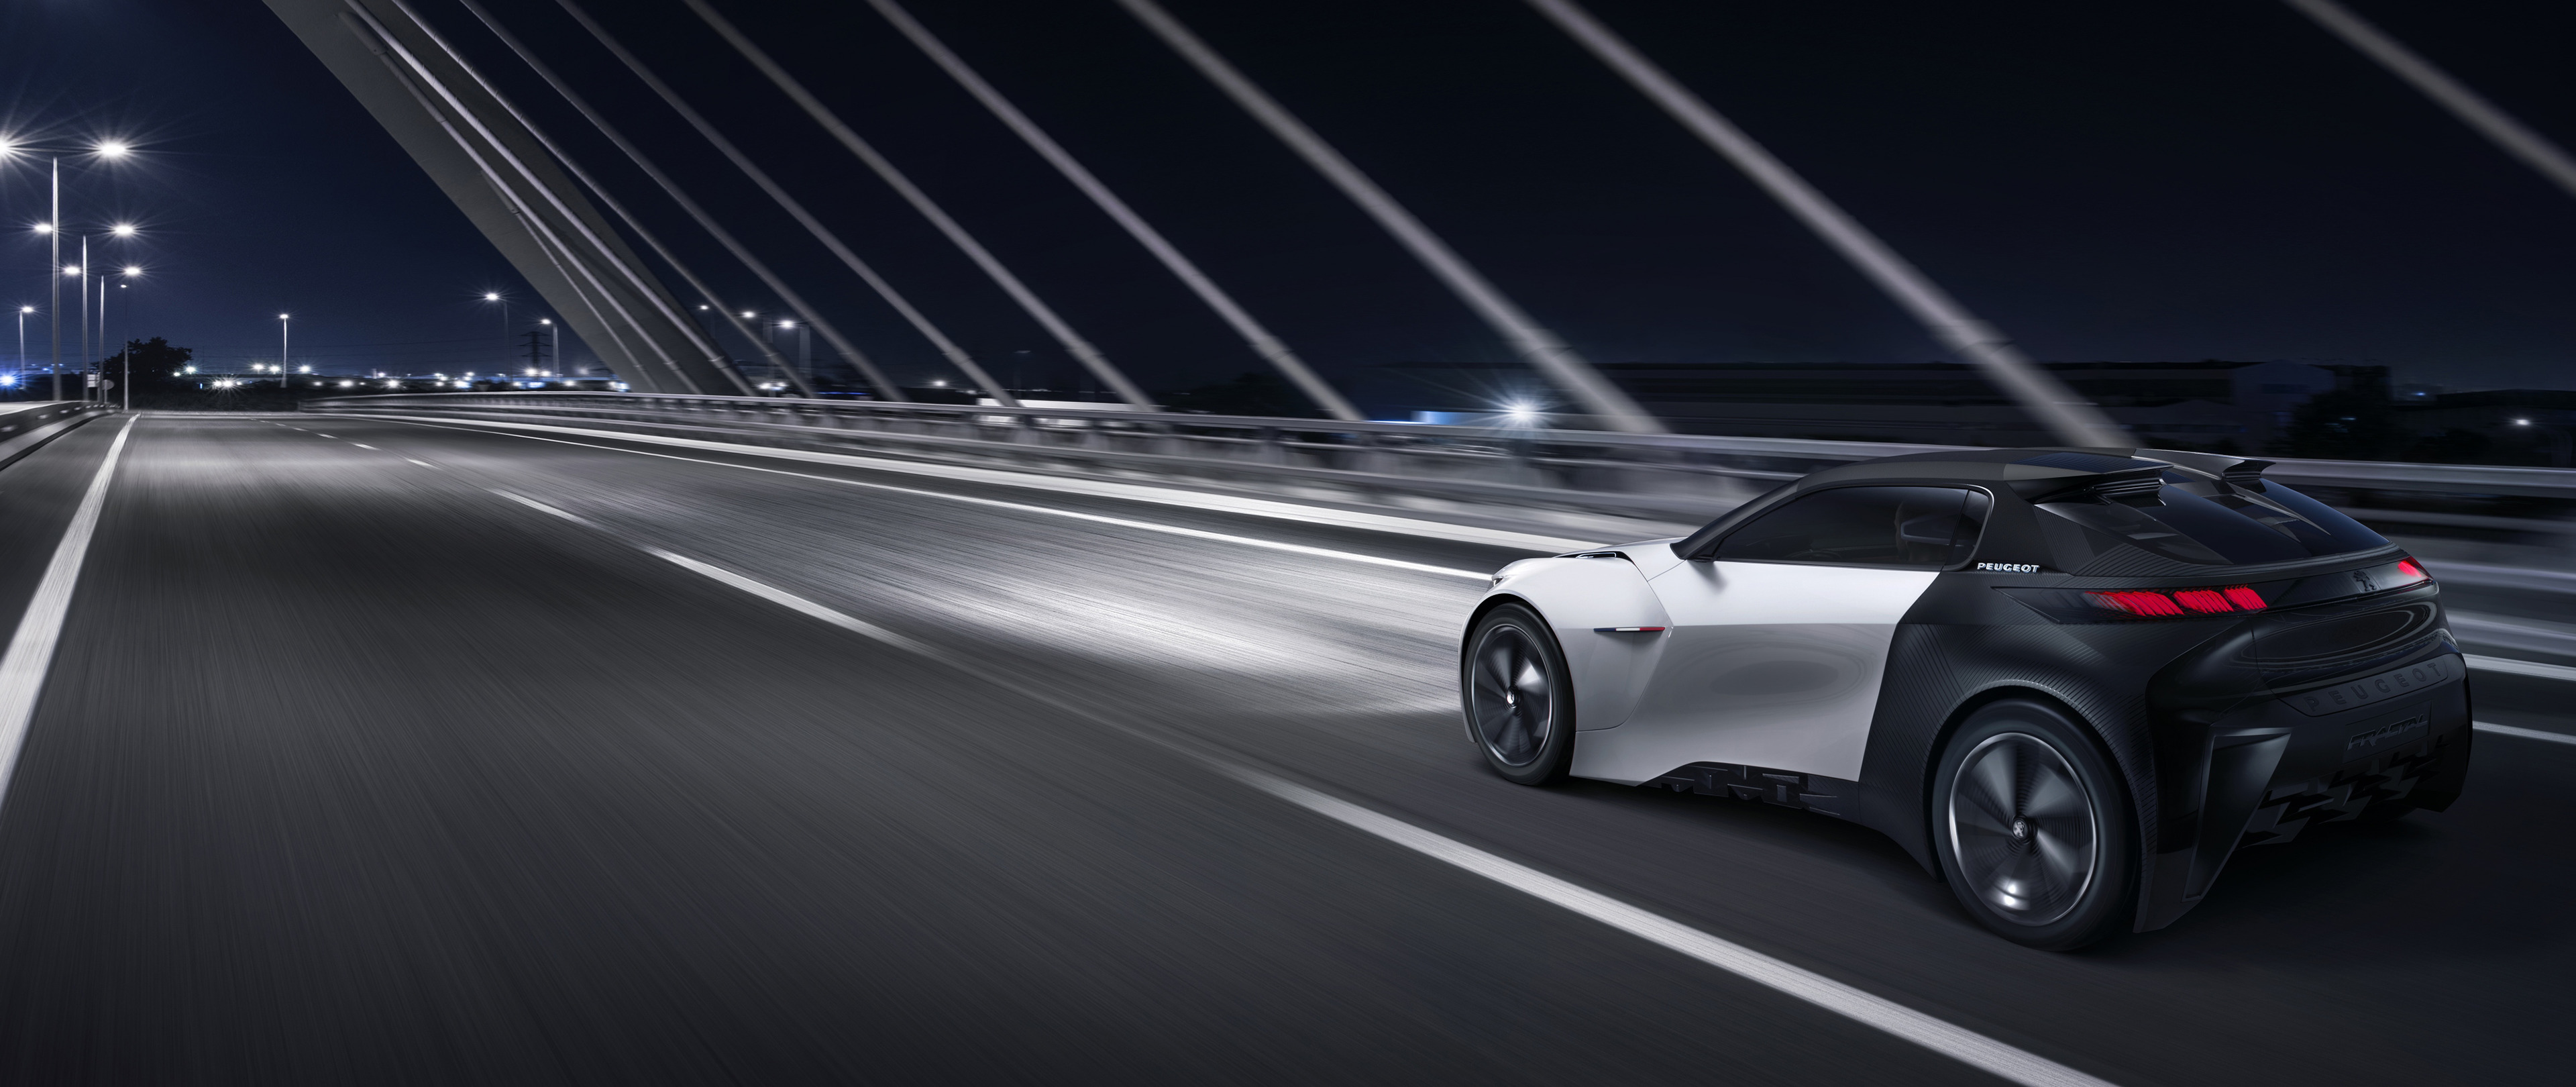 Peugeot Fractal, Concept Cars, Car, Vehicle, Electric Car, Bridge, Road, Motion Blur, Night, Lights Wallpaper